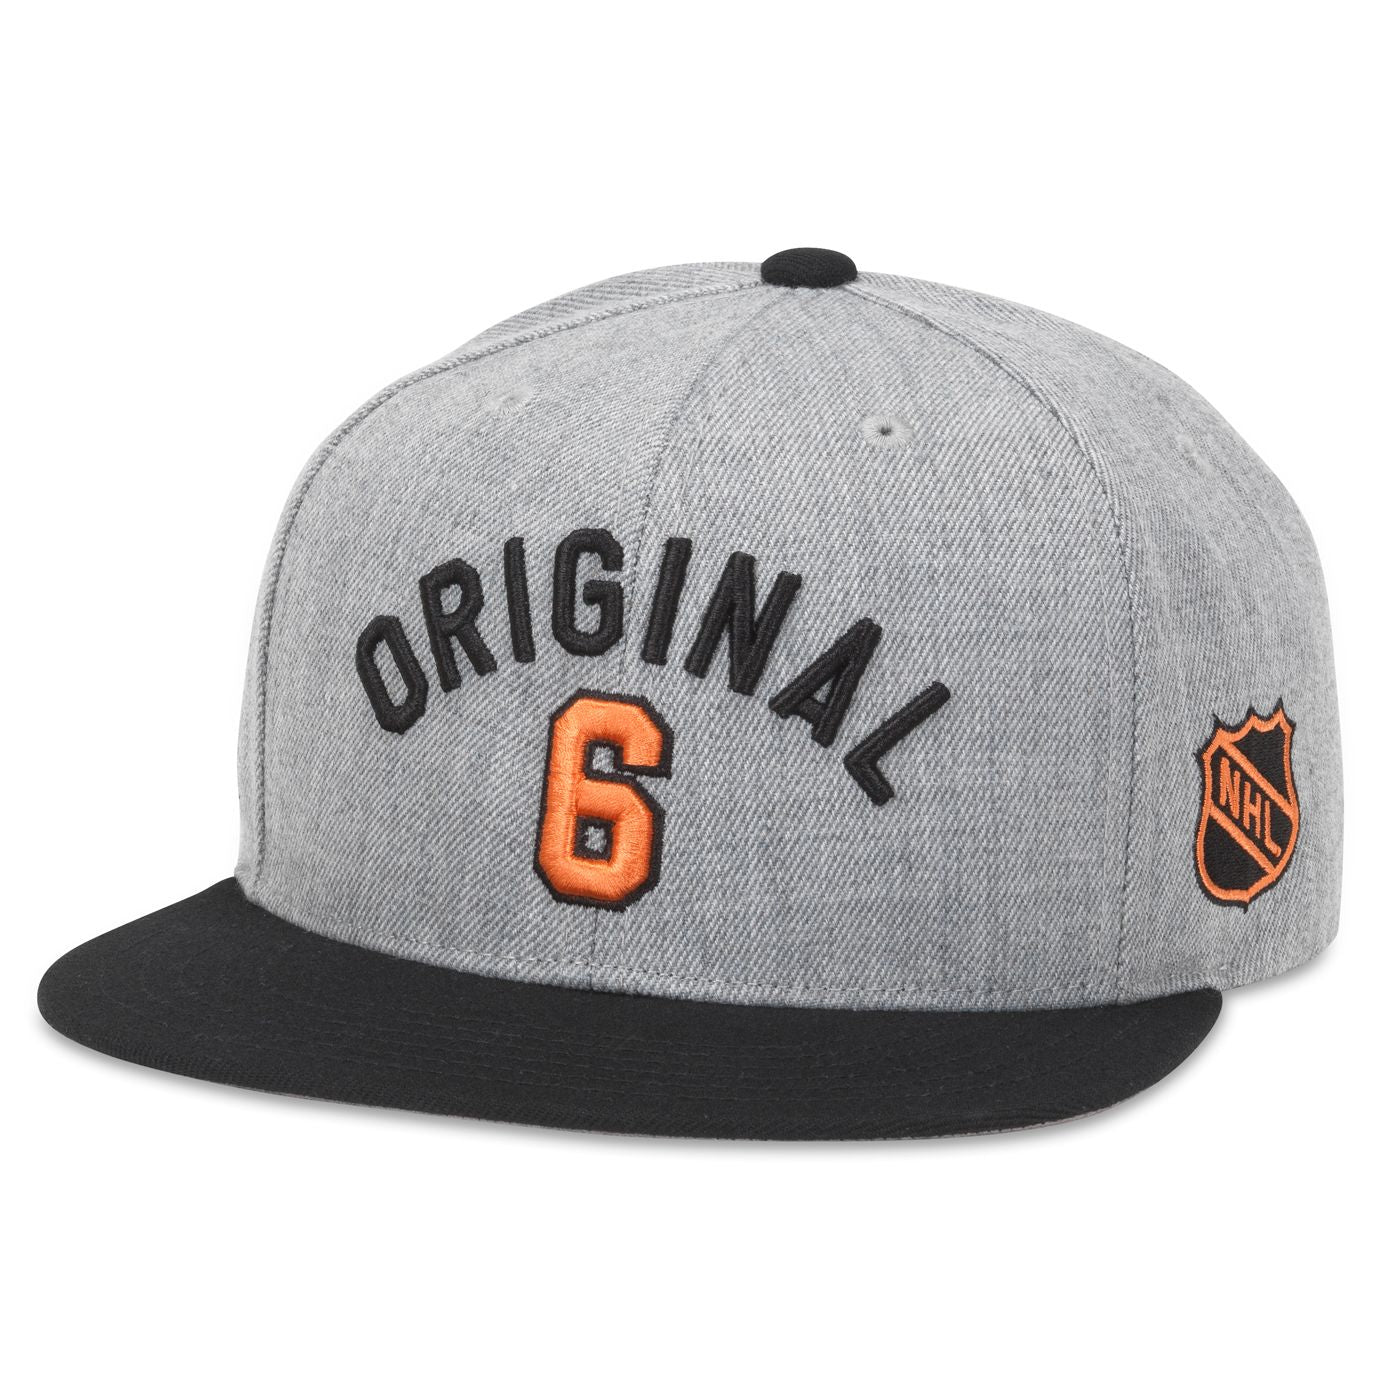 NHL ORIGINAL 6 Hat